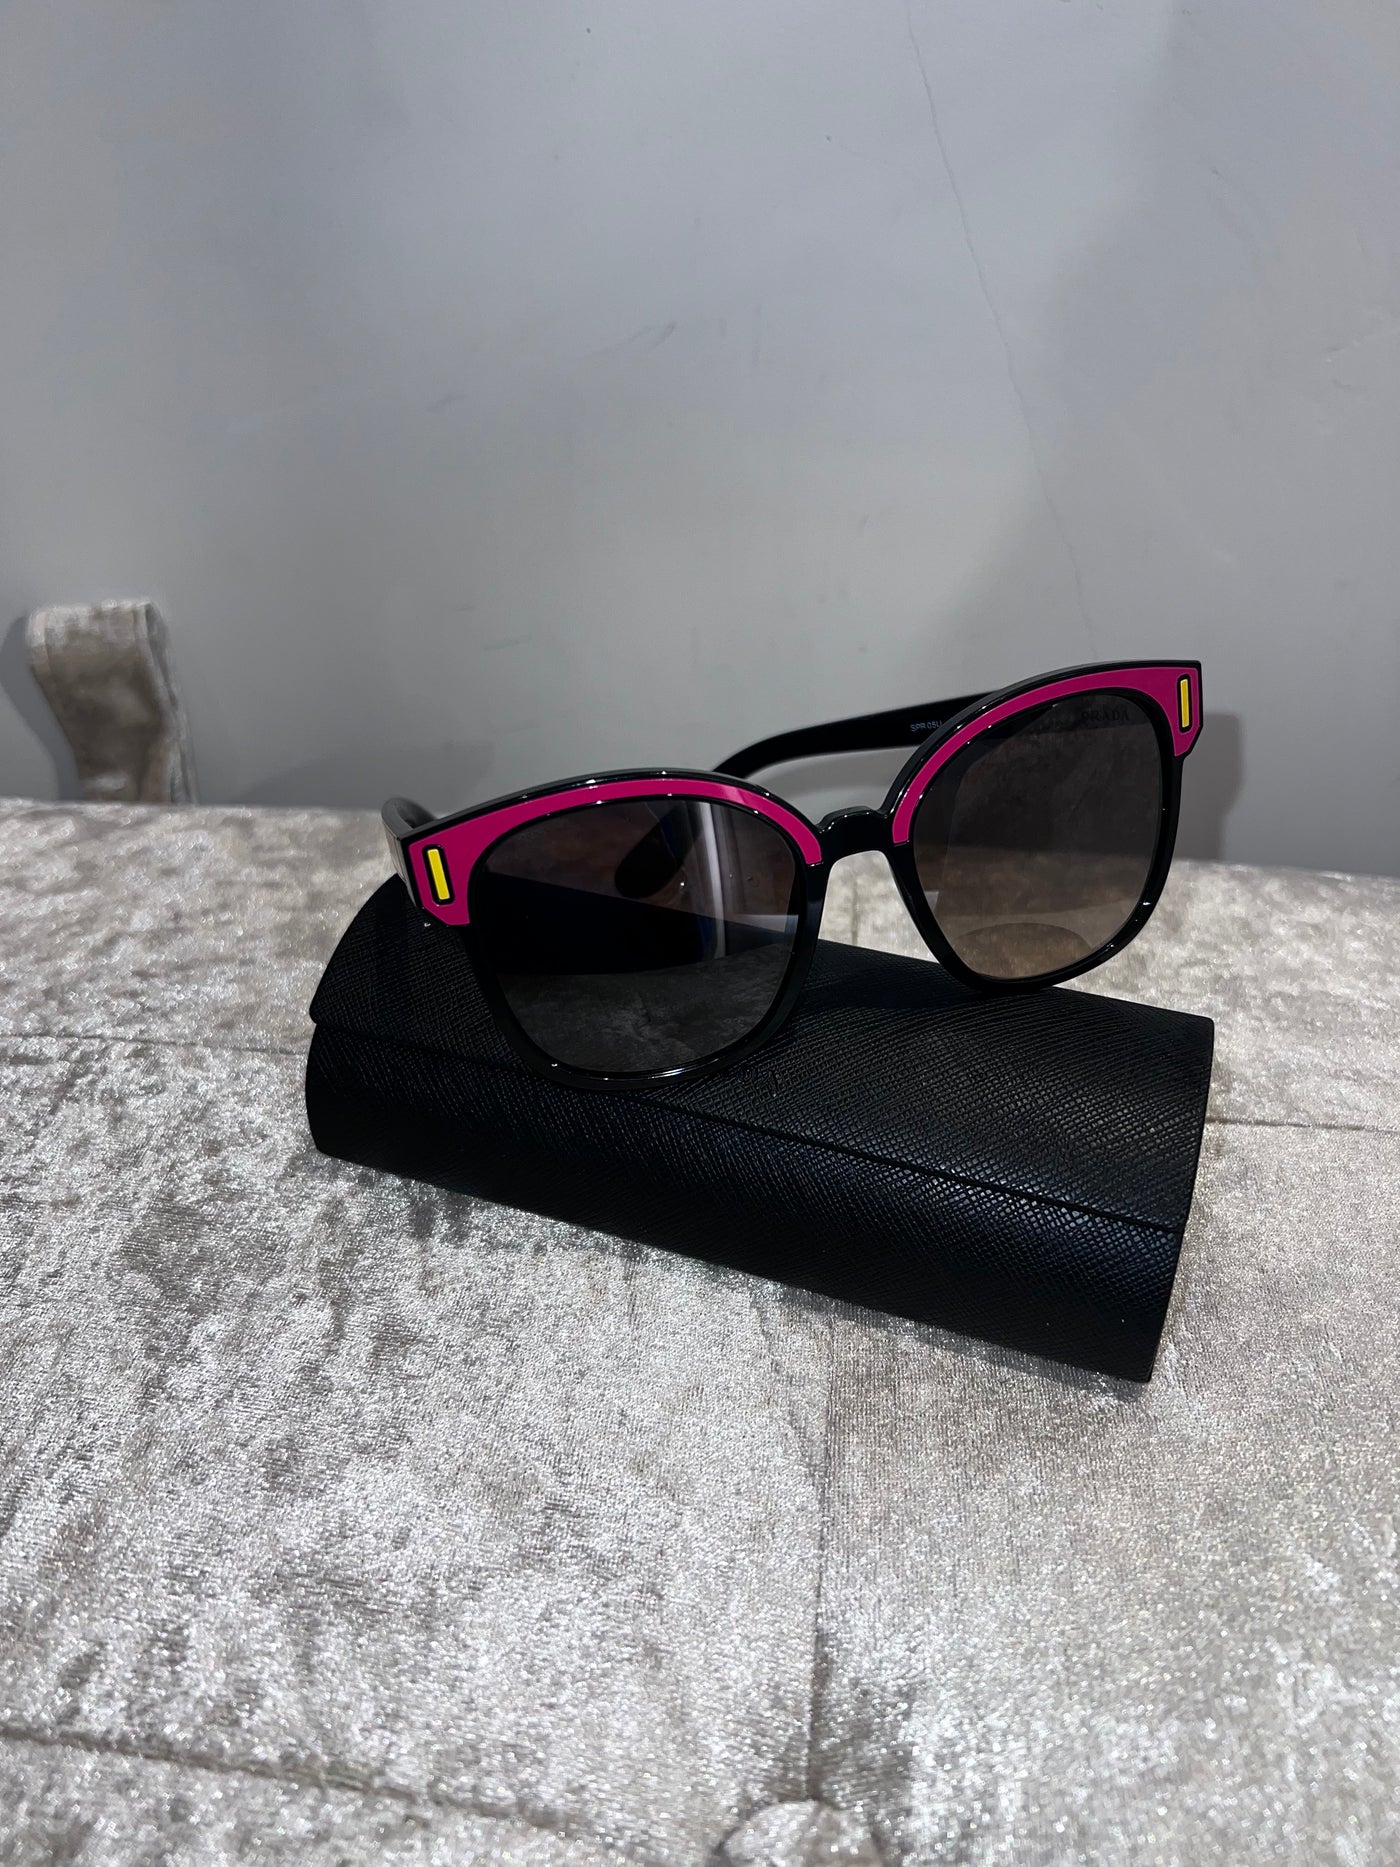 Prada sunglasses with colour blocking